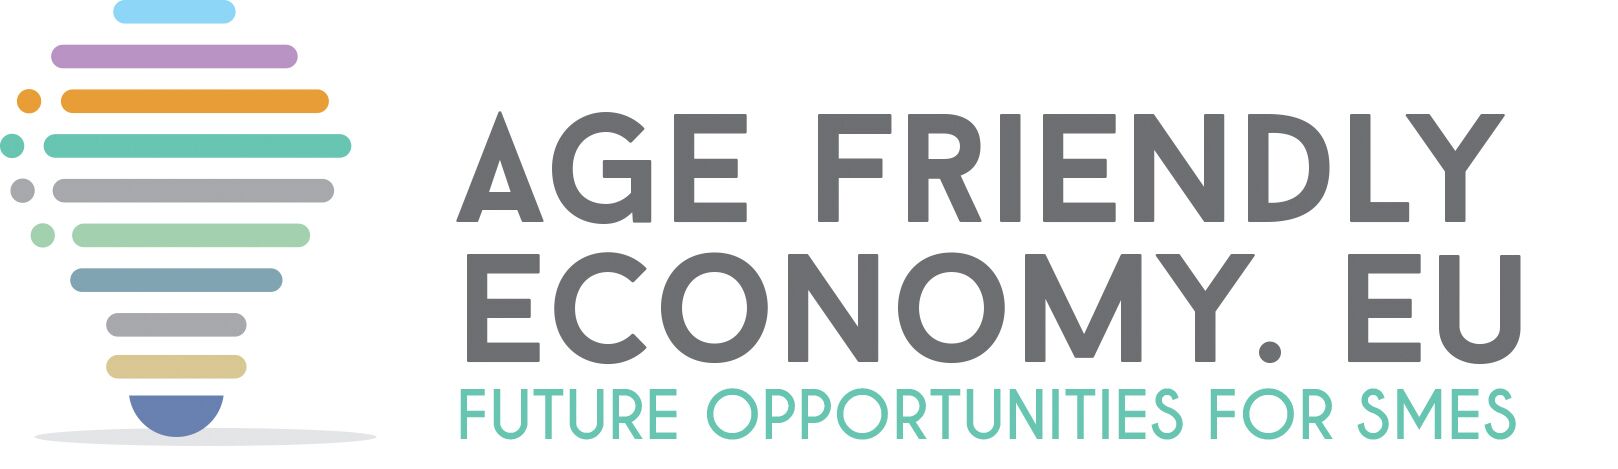 age friendly economy logo